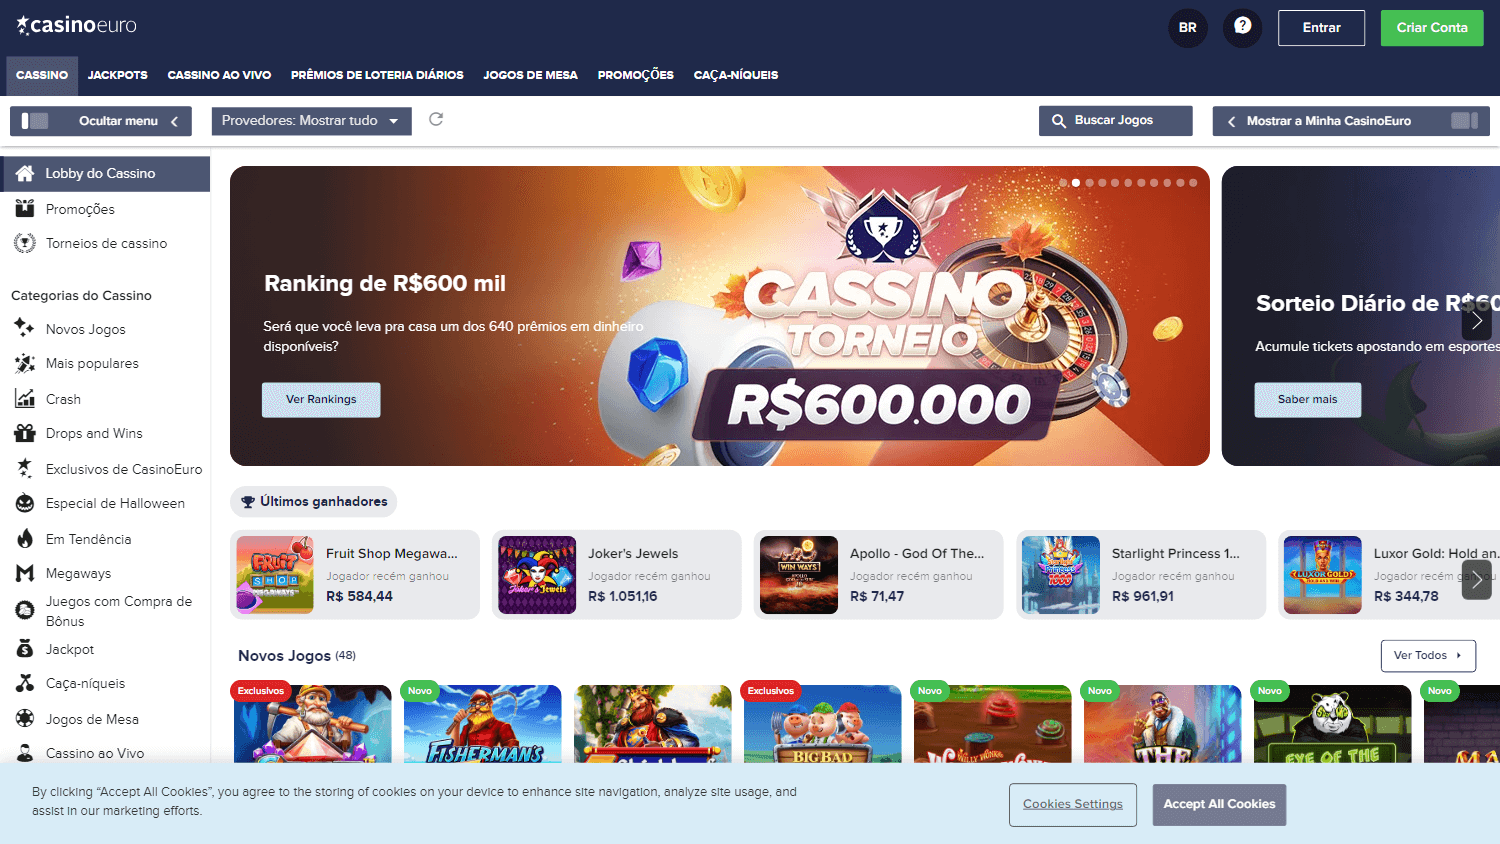 casinoeuro_homepage_desktop